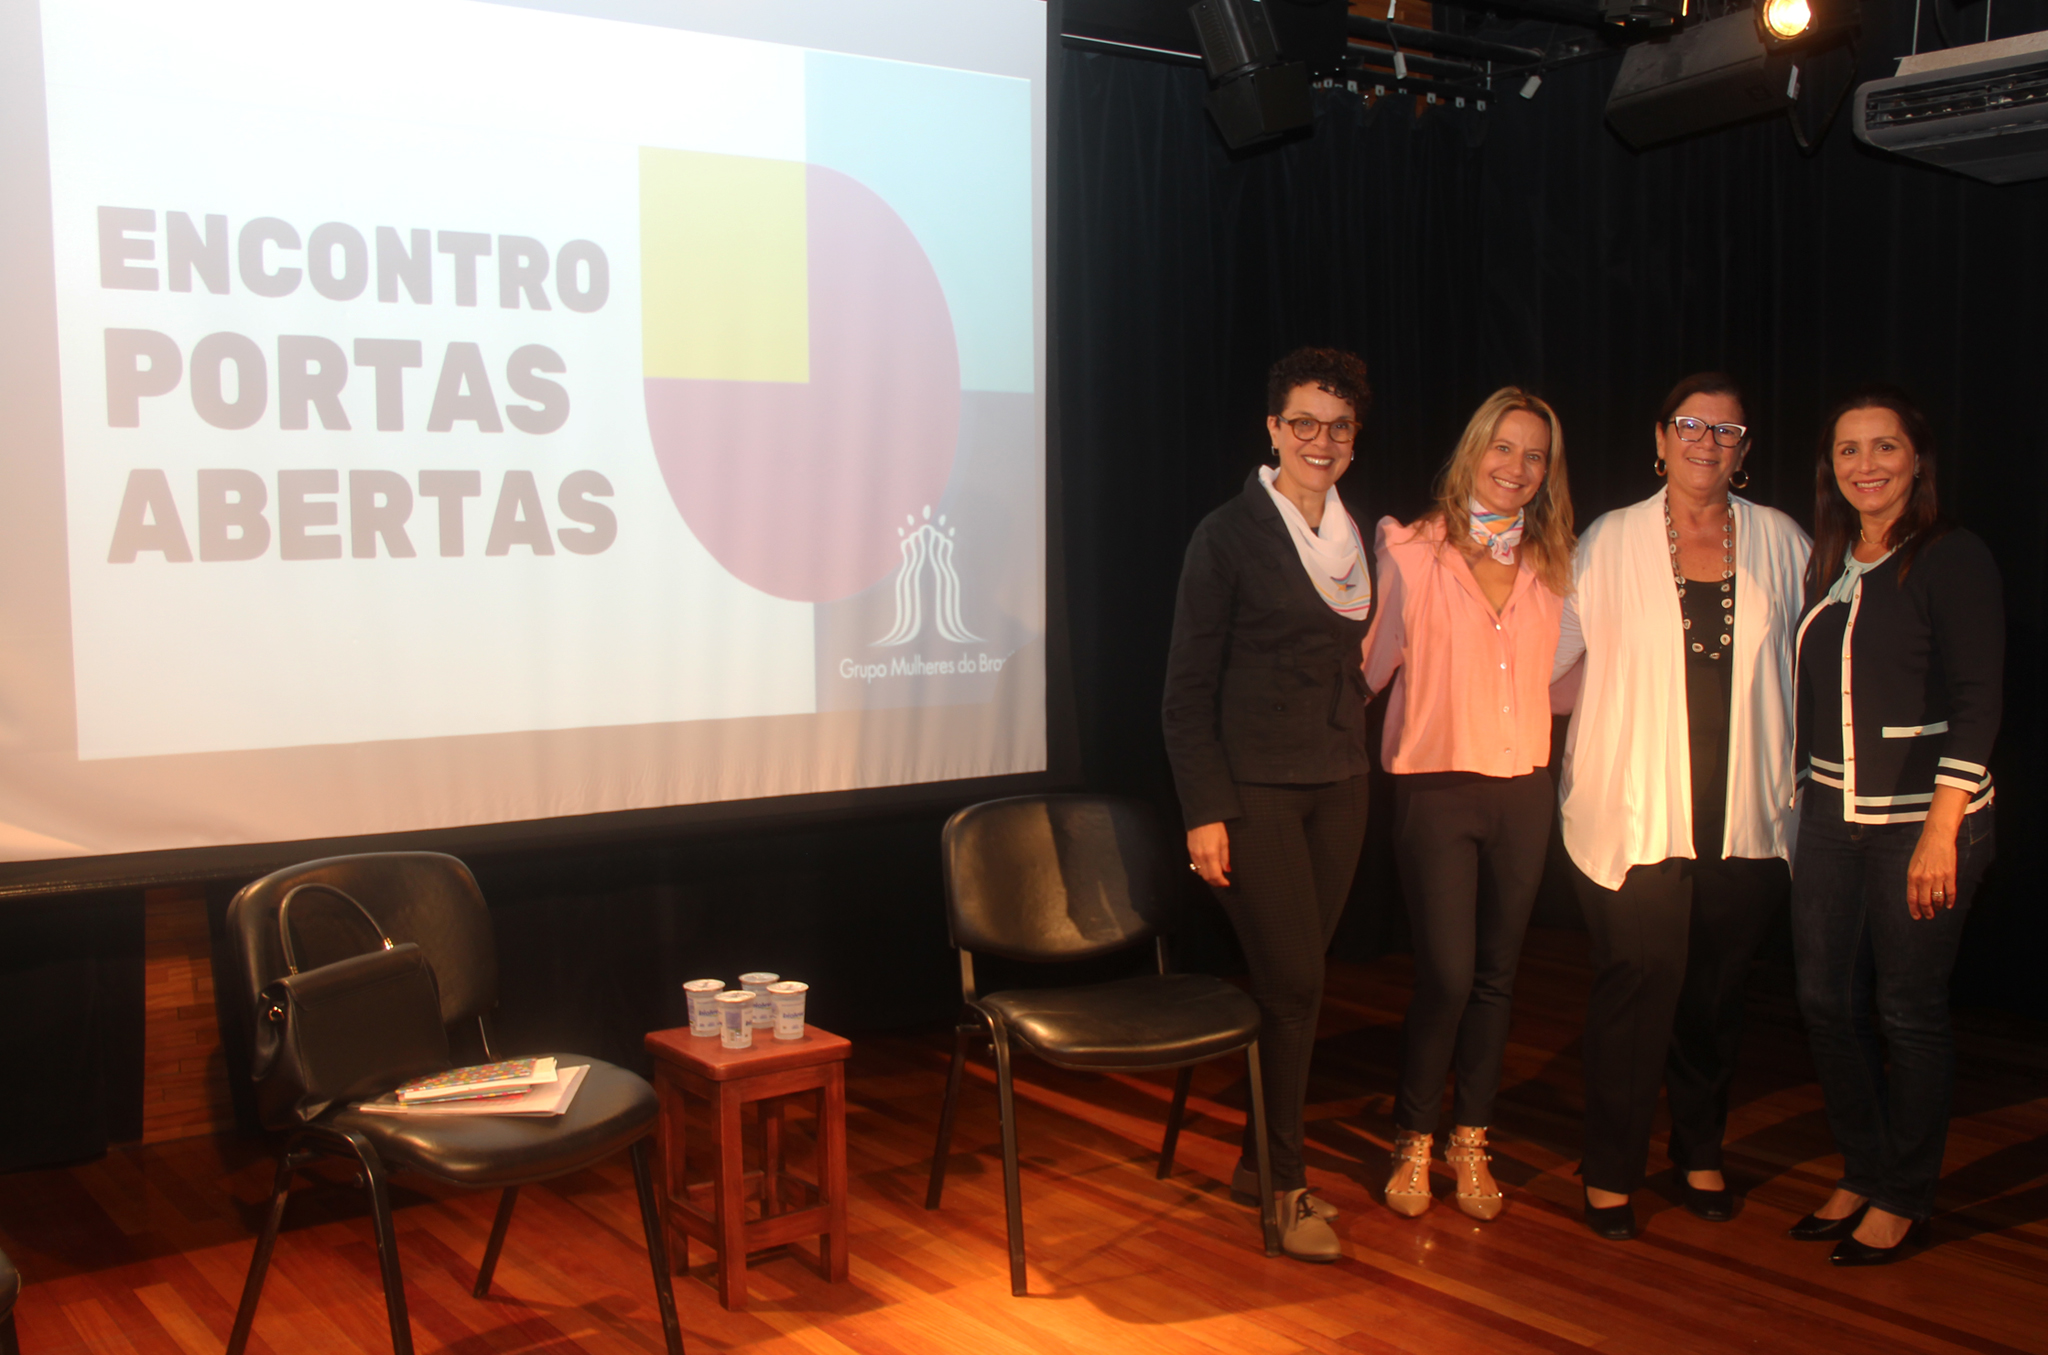 As líderes do Grupo Mulheres do Brasil, Inês Rocha, Ariane Trevissan Fiori e Andréa Sophia com a palestrante convidada desembargadora Andréa Pachá